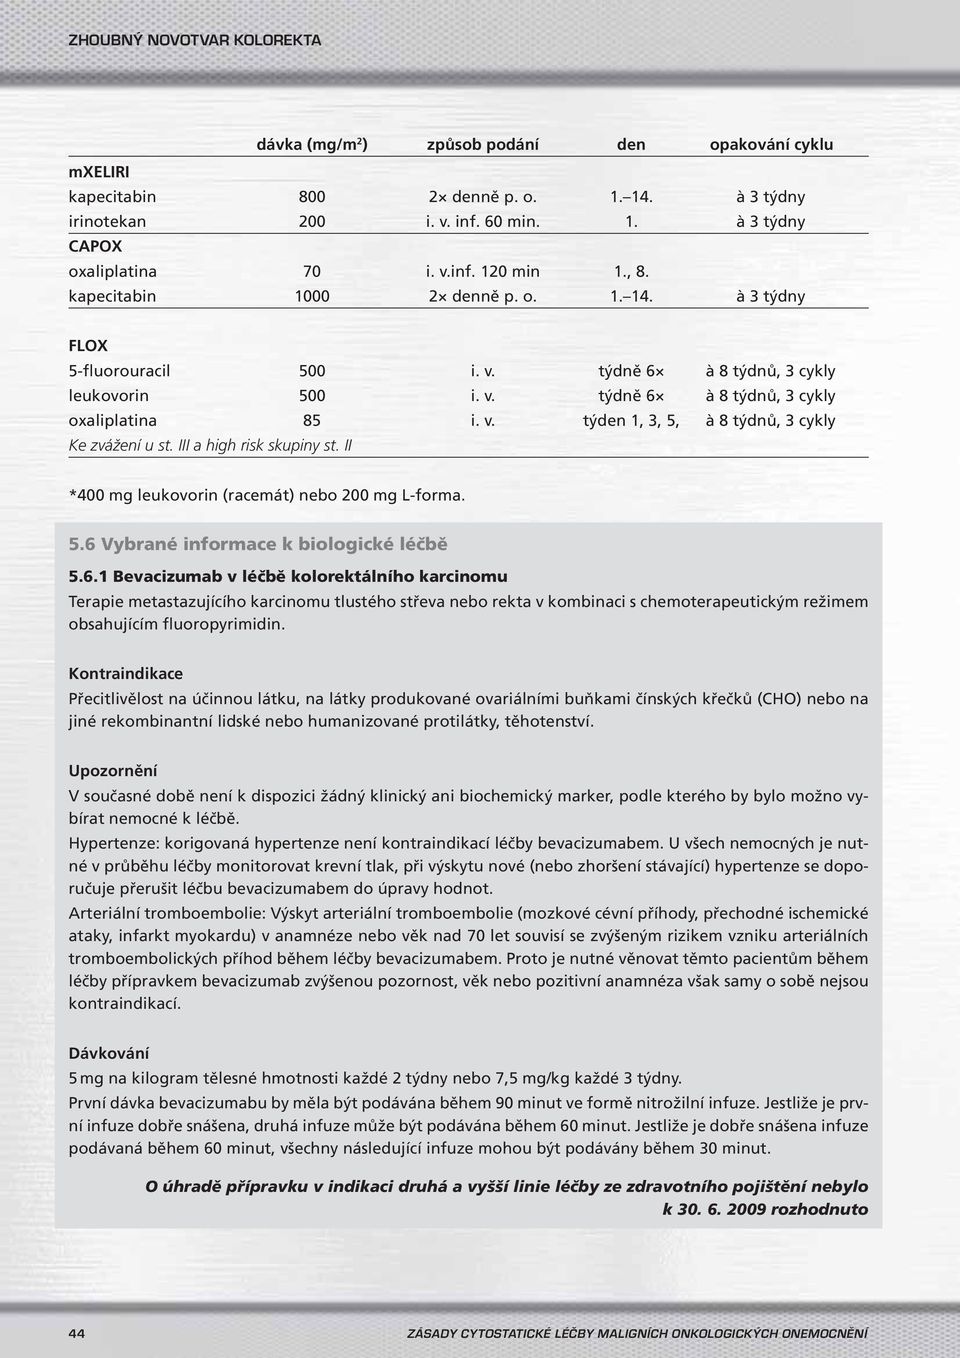 III a high risk skupiny st. II *400 mg leukovorin (racemát) 200 mg L-forma. 5.6 